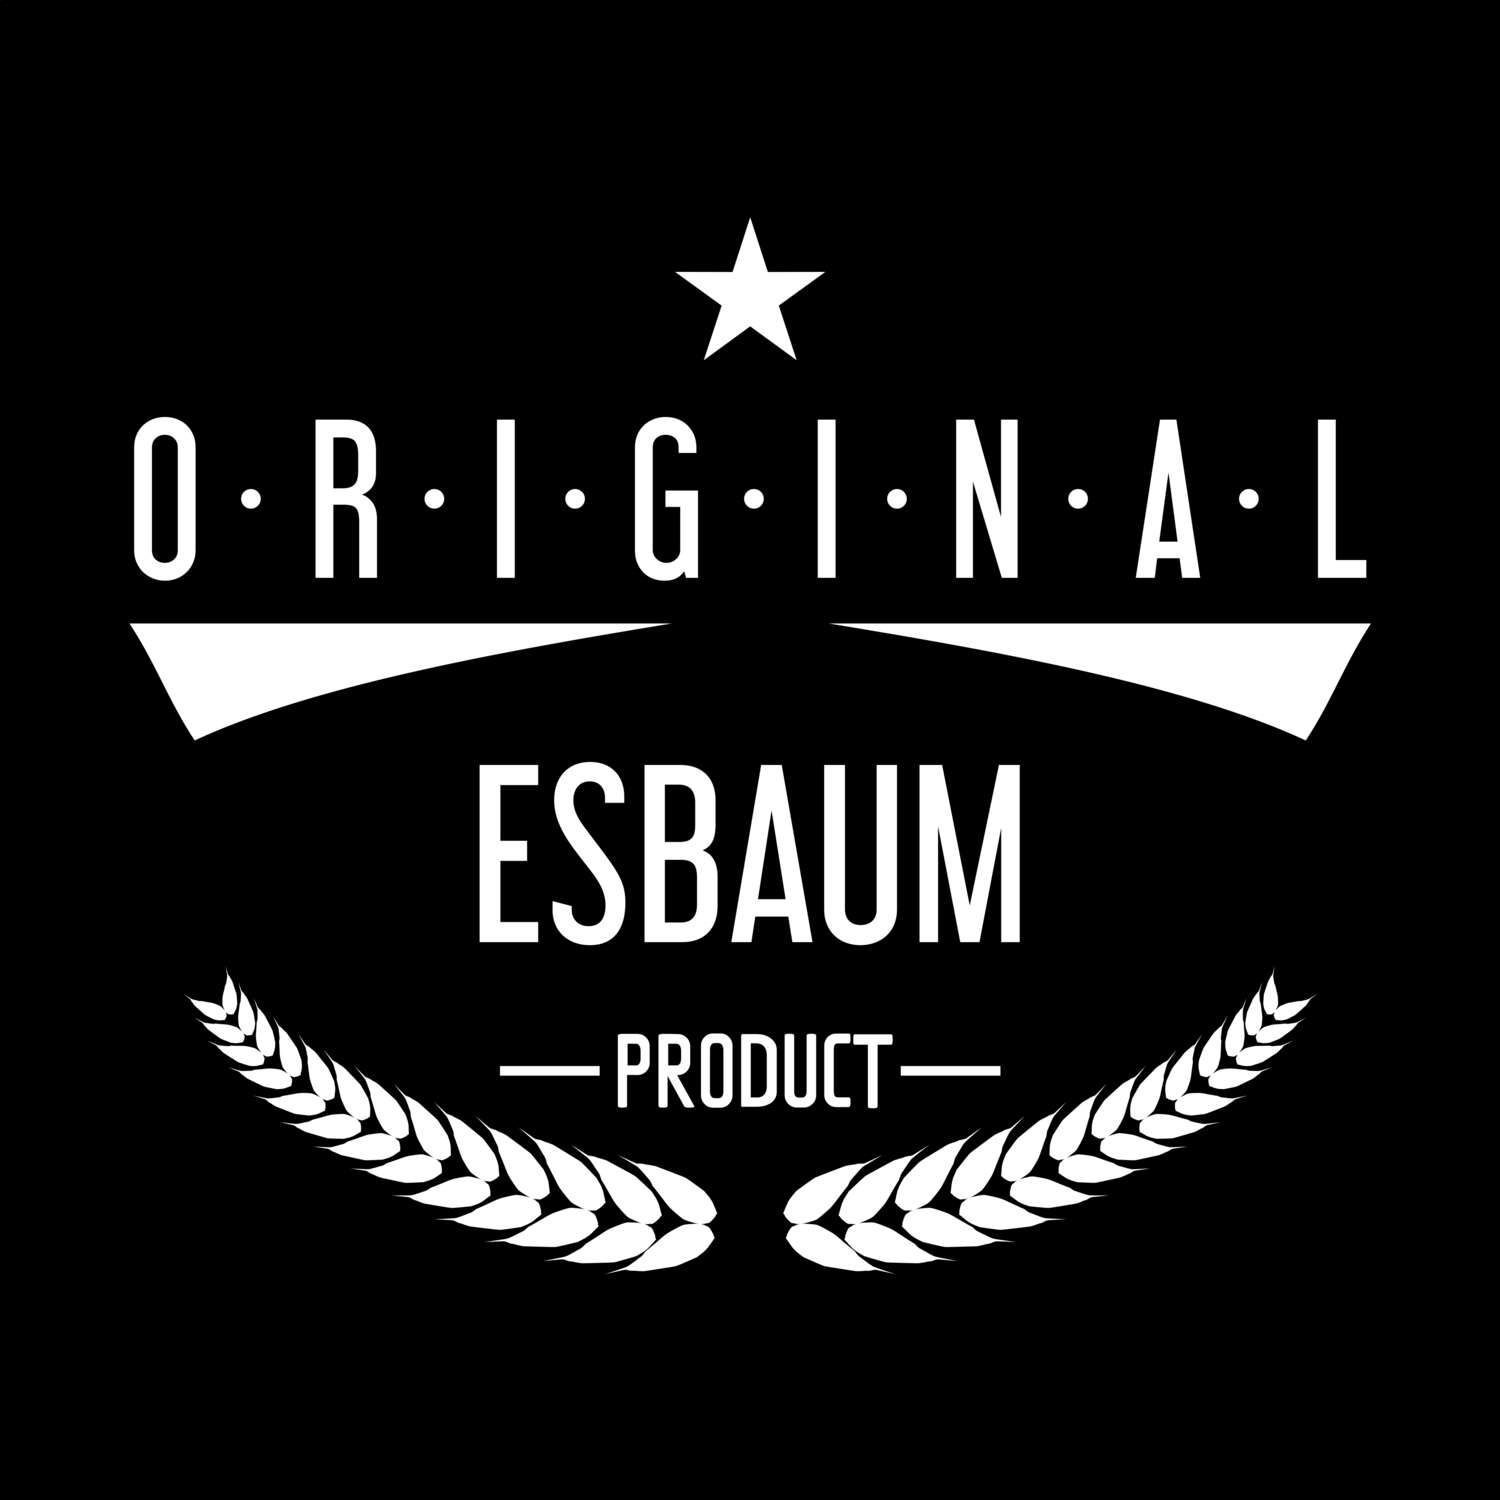 Esbaum T-Shirt »Original Product«